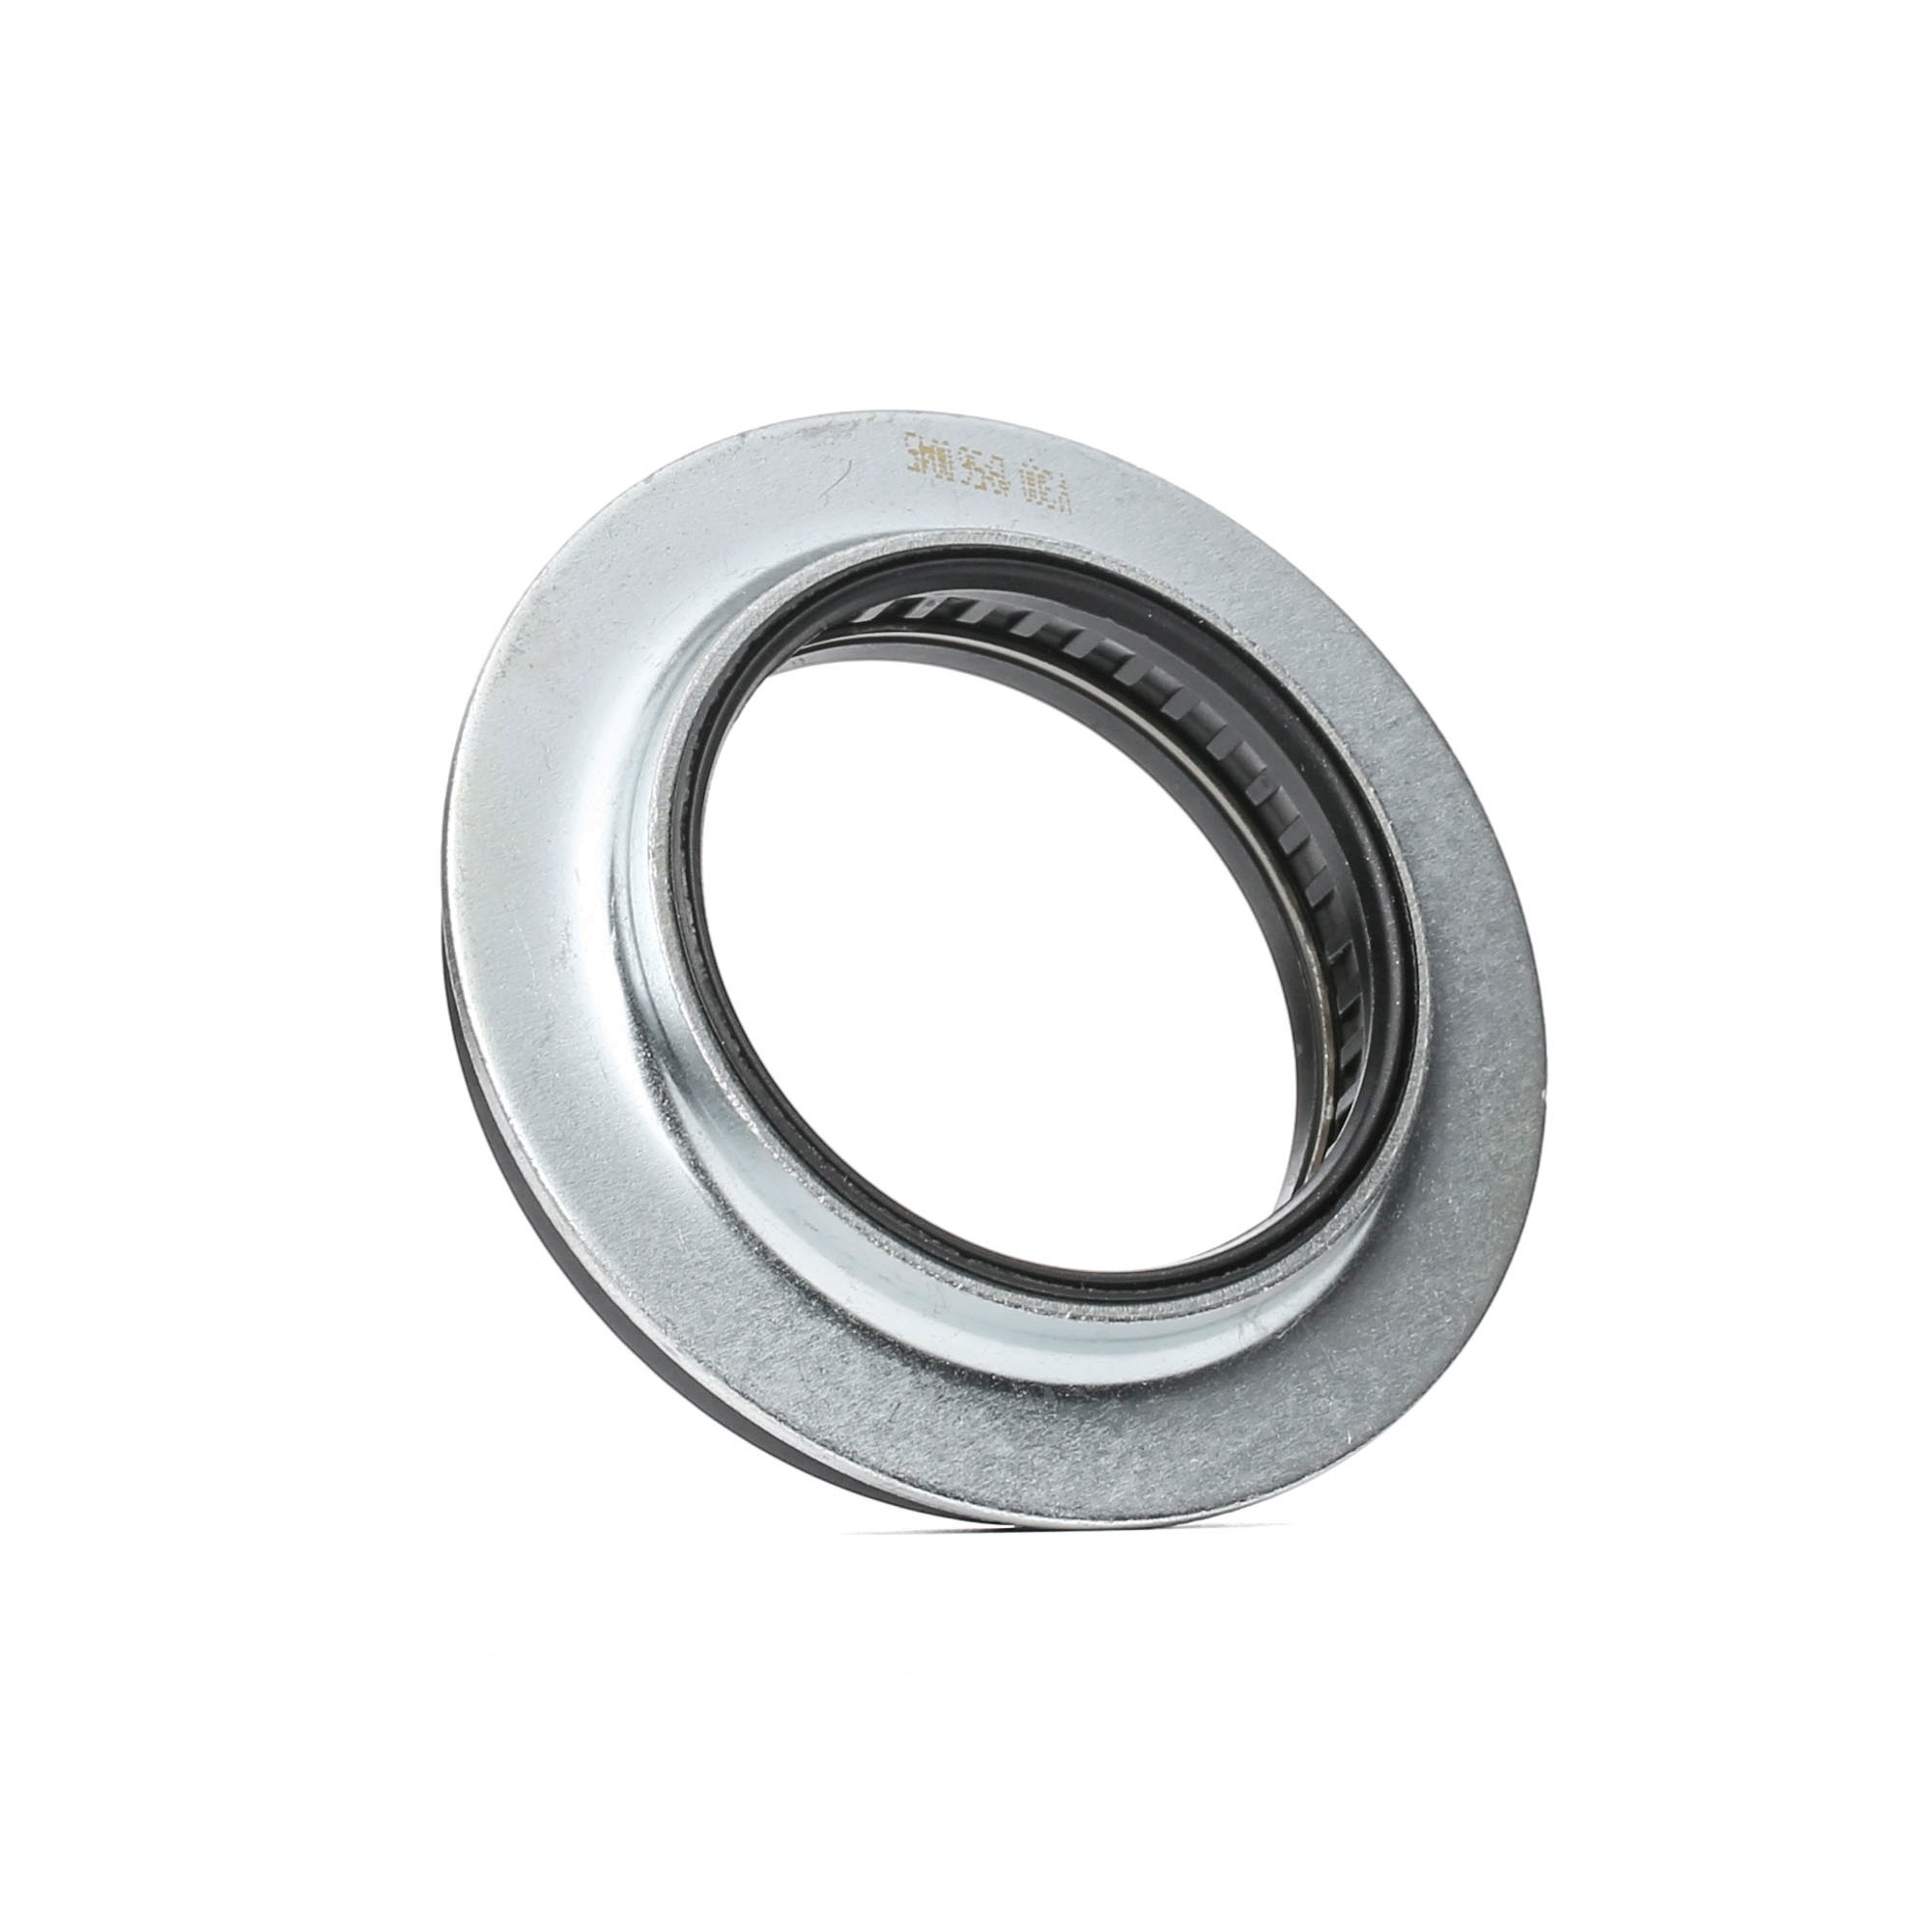 FAG 713 0388 20 Scirocco III (137, 138) 2010 Top mount bearing